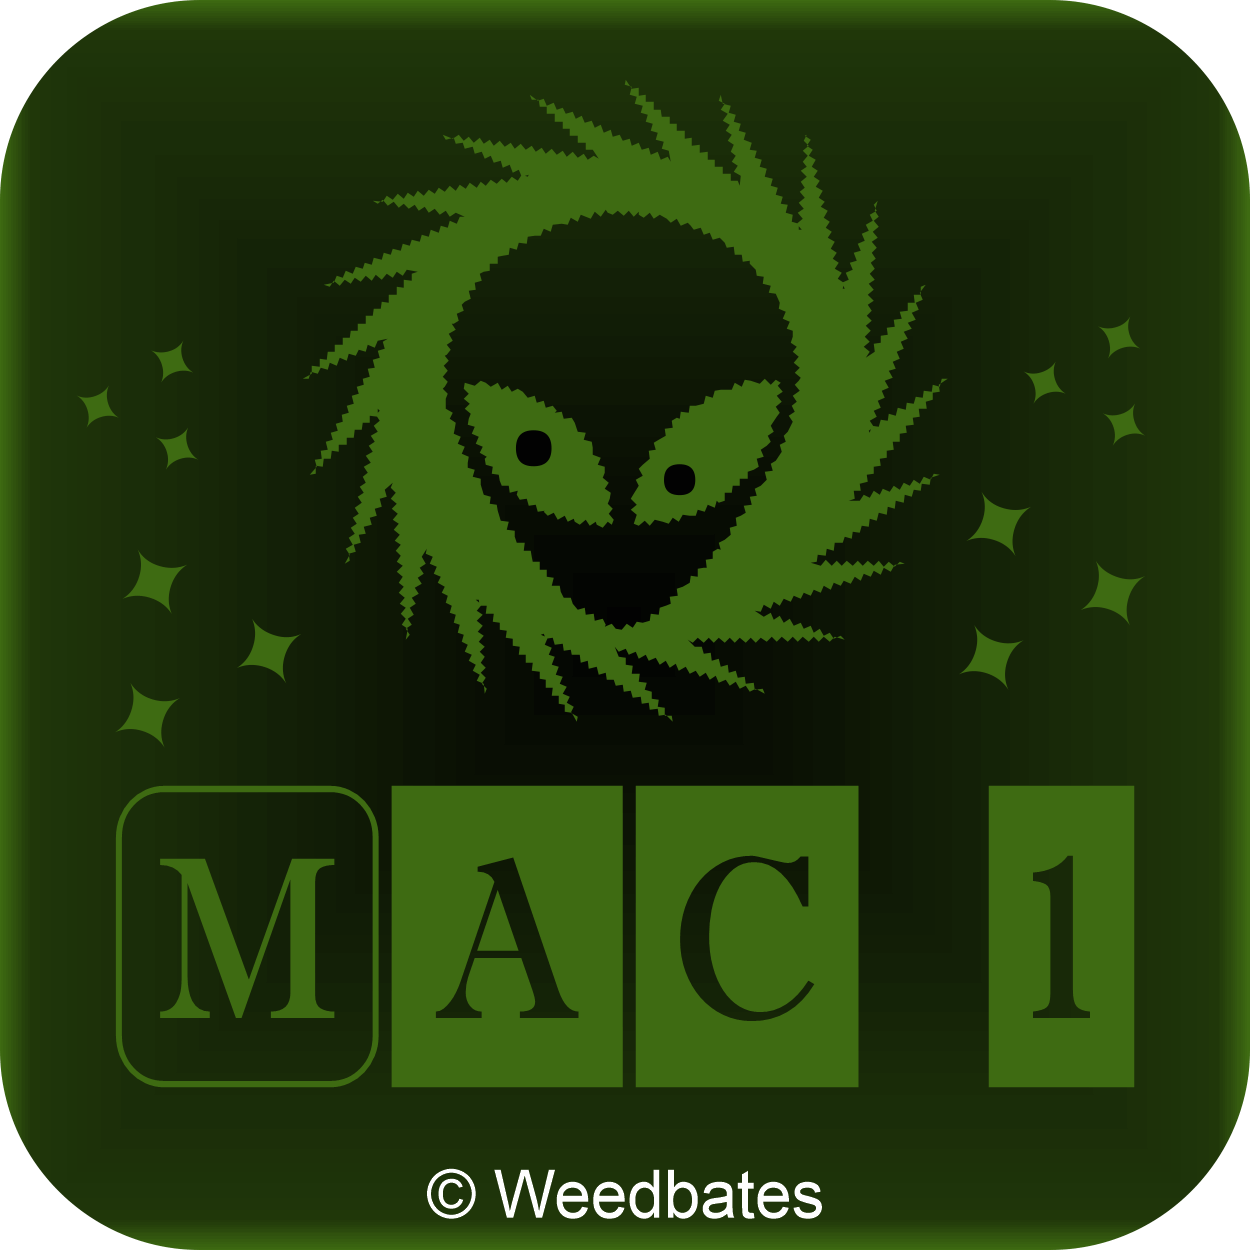 MAC 1 strain